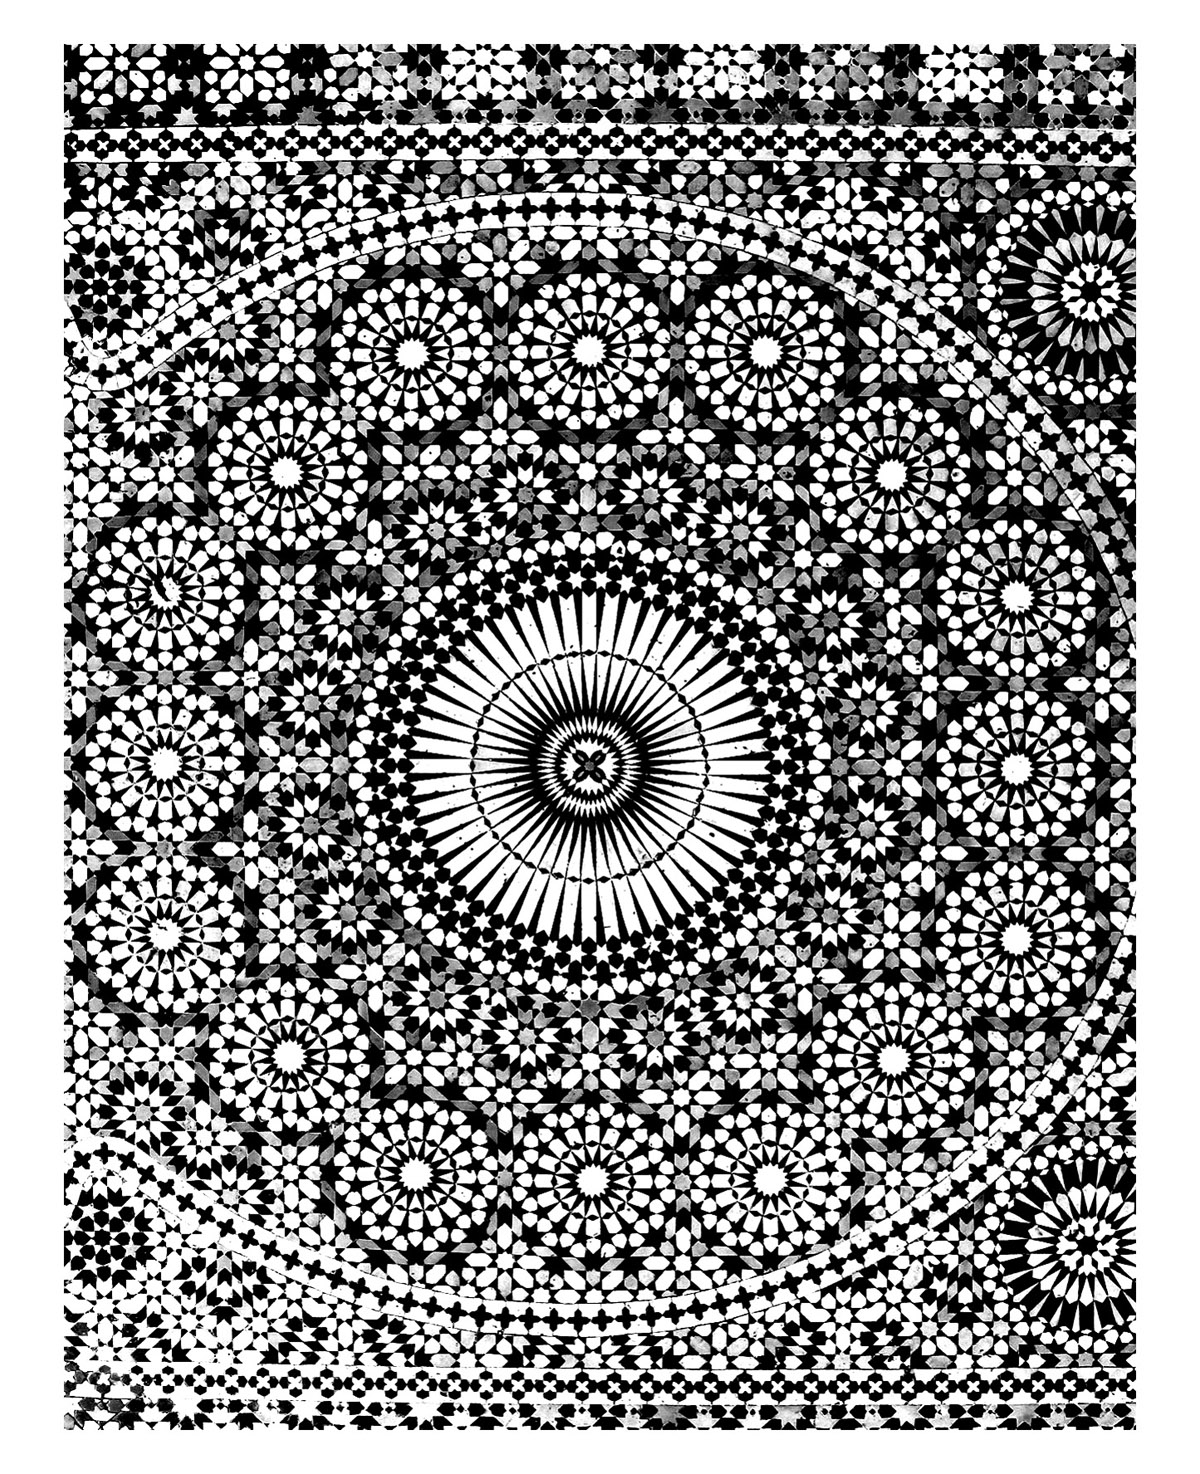 Oriental mosaique mekhnes - Image with : Arab, Symmetry